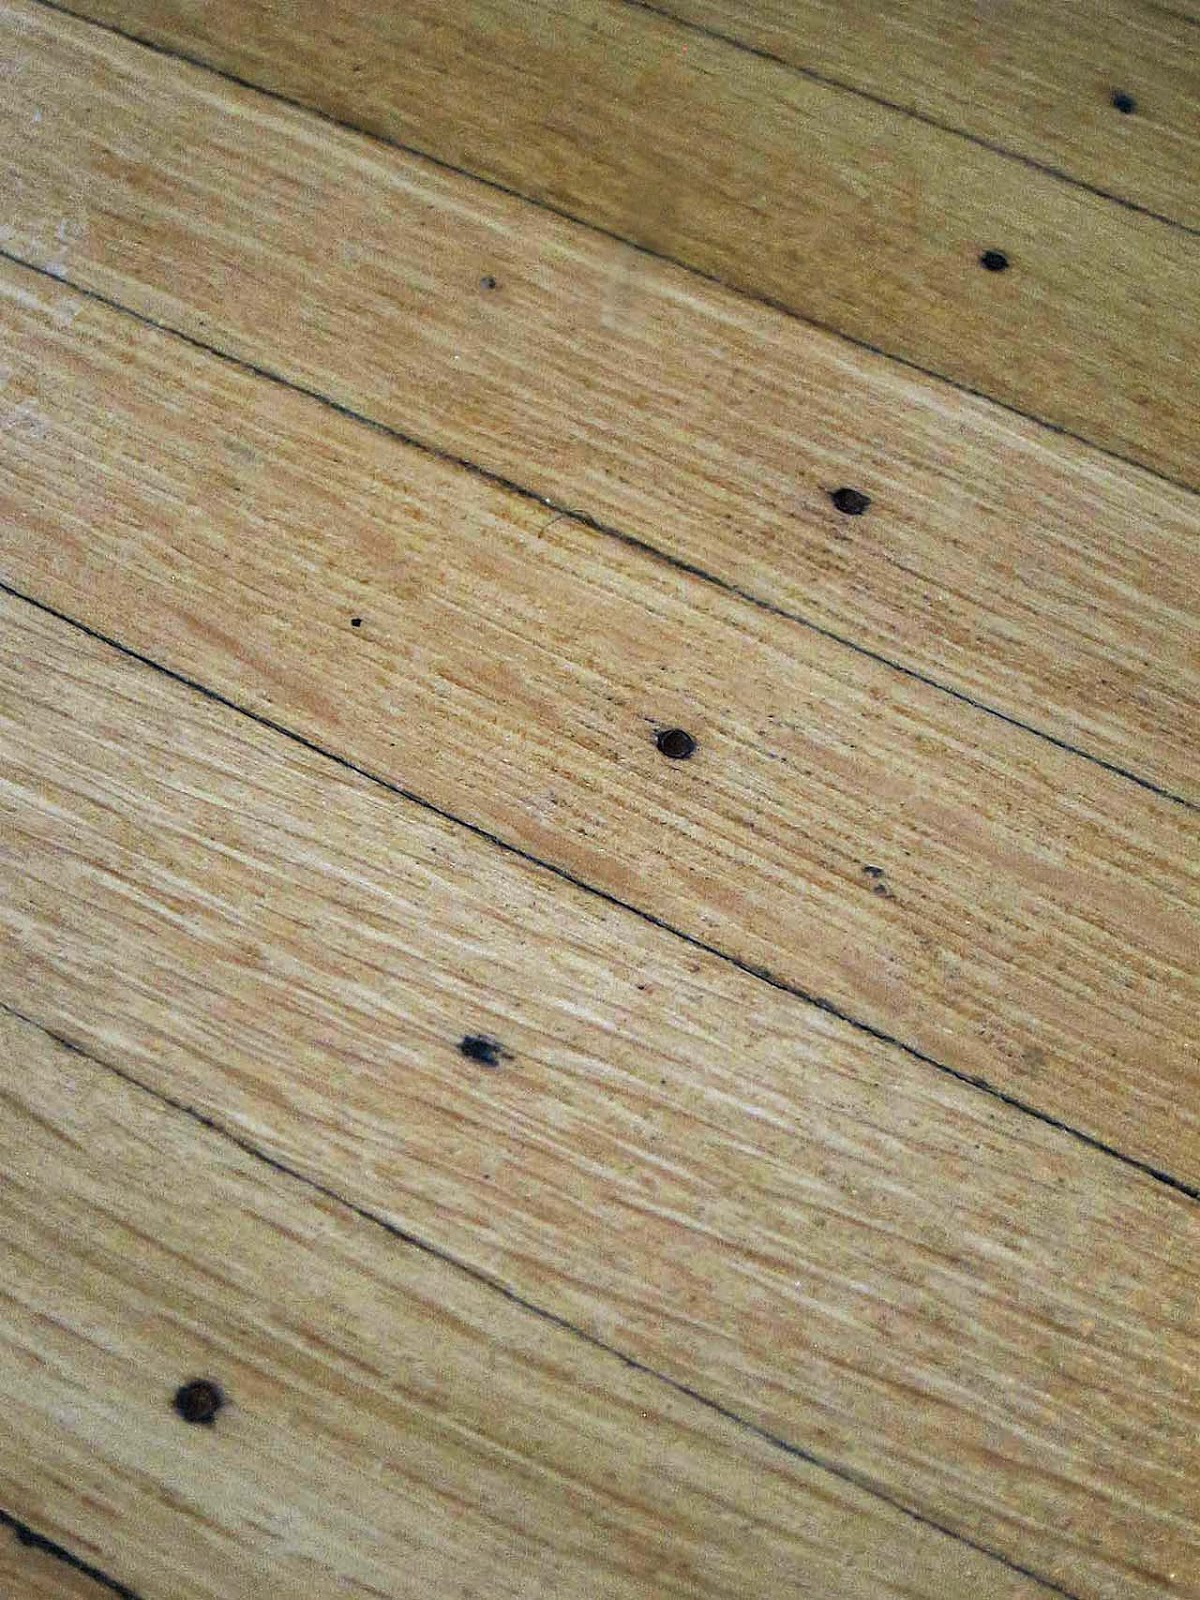 Heritage Hardwood Floor Is Face Nailed, Face Nailing Hardwood Floors